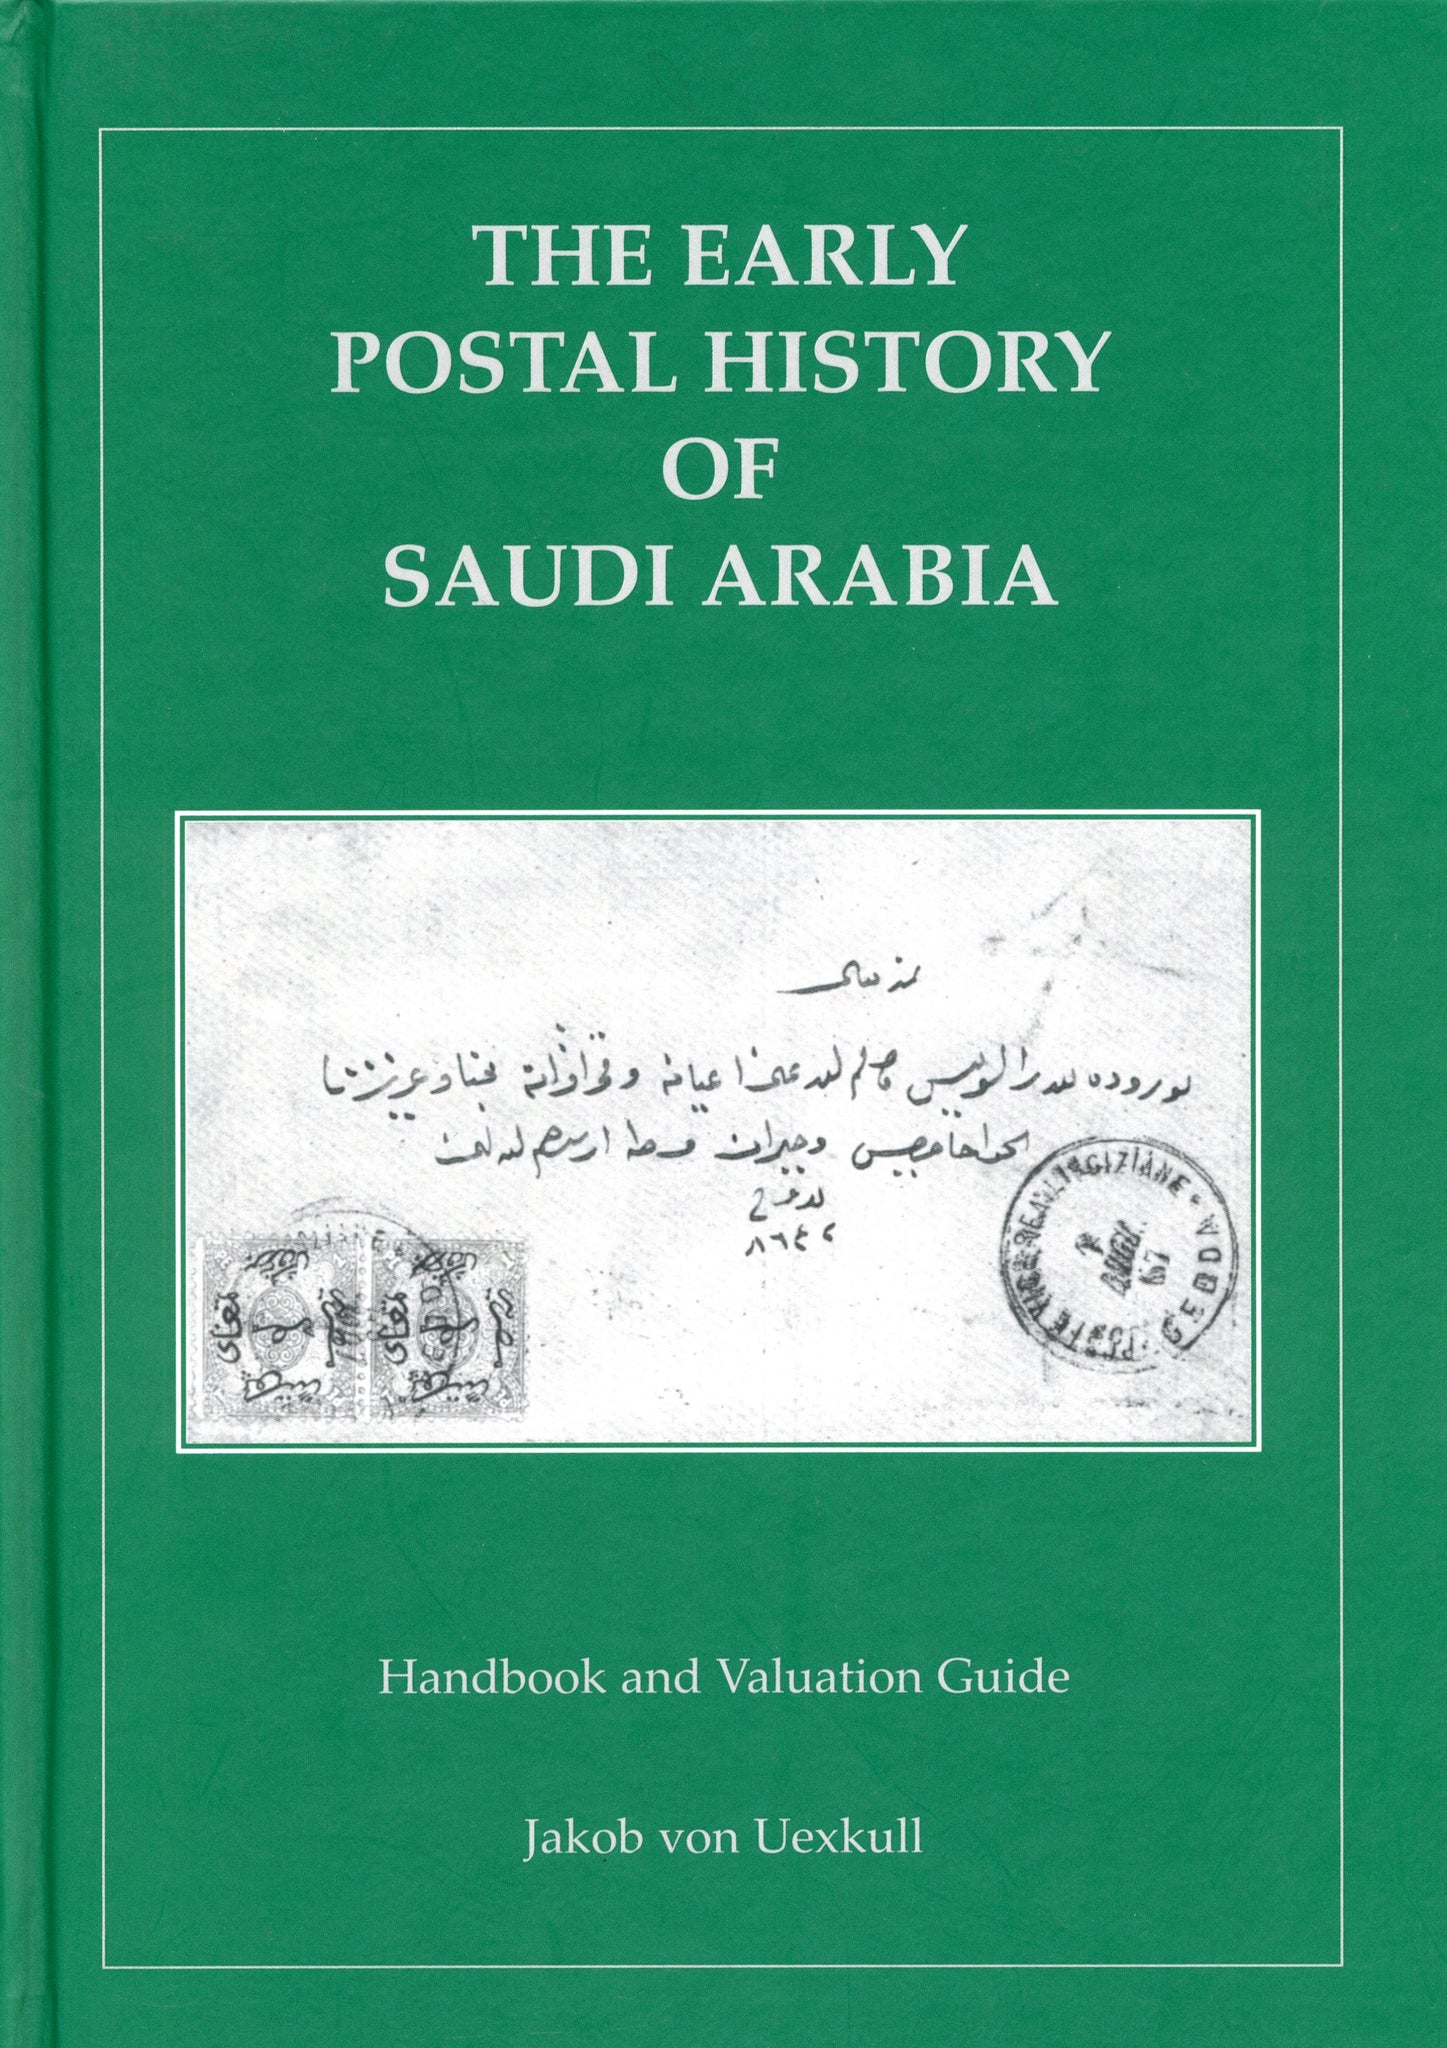 The Early Postal History of Saudi Arabia by von Uexkull, Jakob